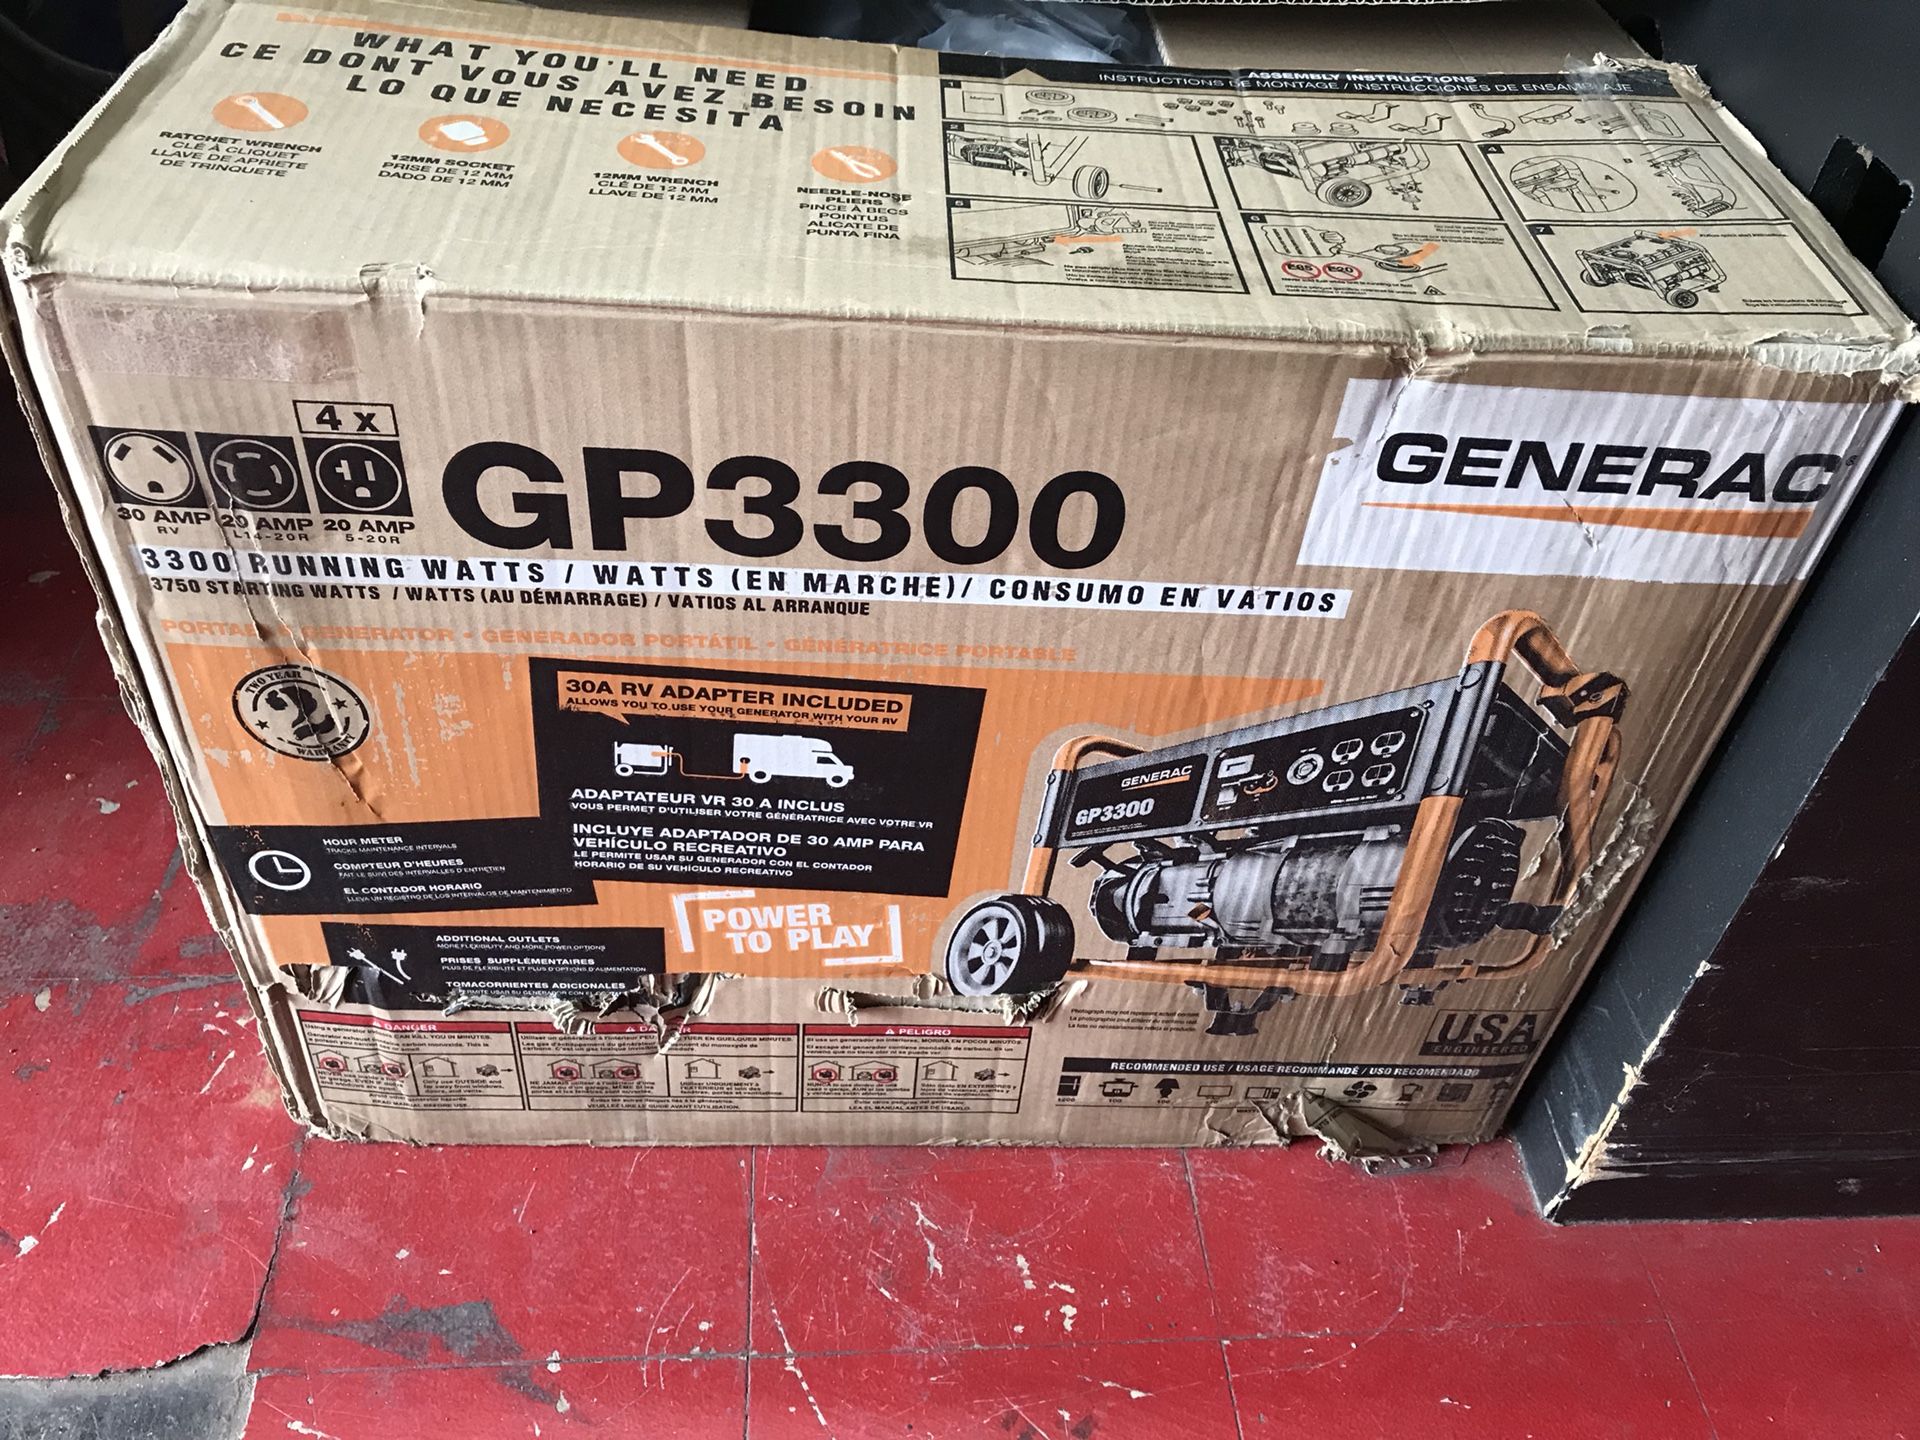 Generac 3300 running watt portable generator